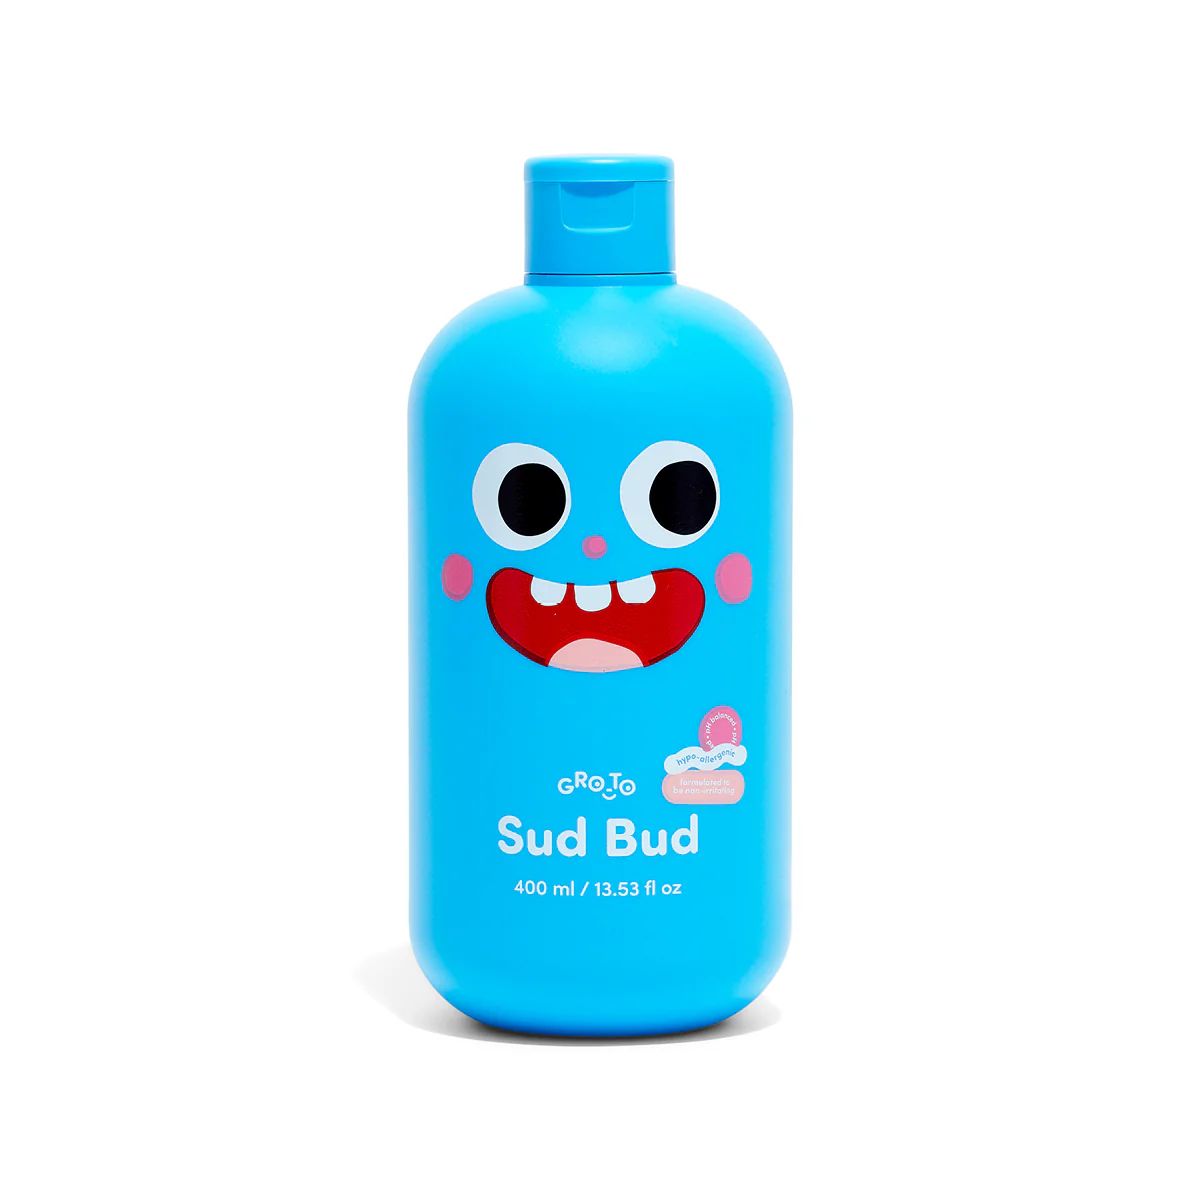 Sud Bud | Go-To Skin Care (ANZ)